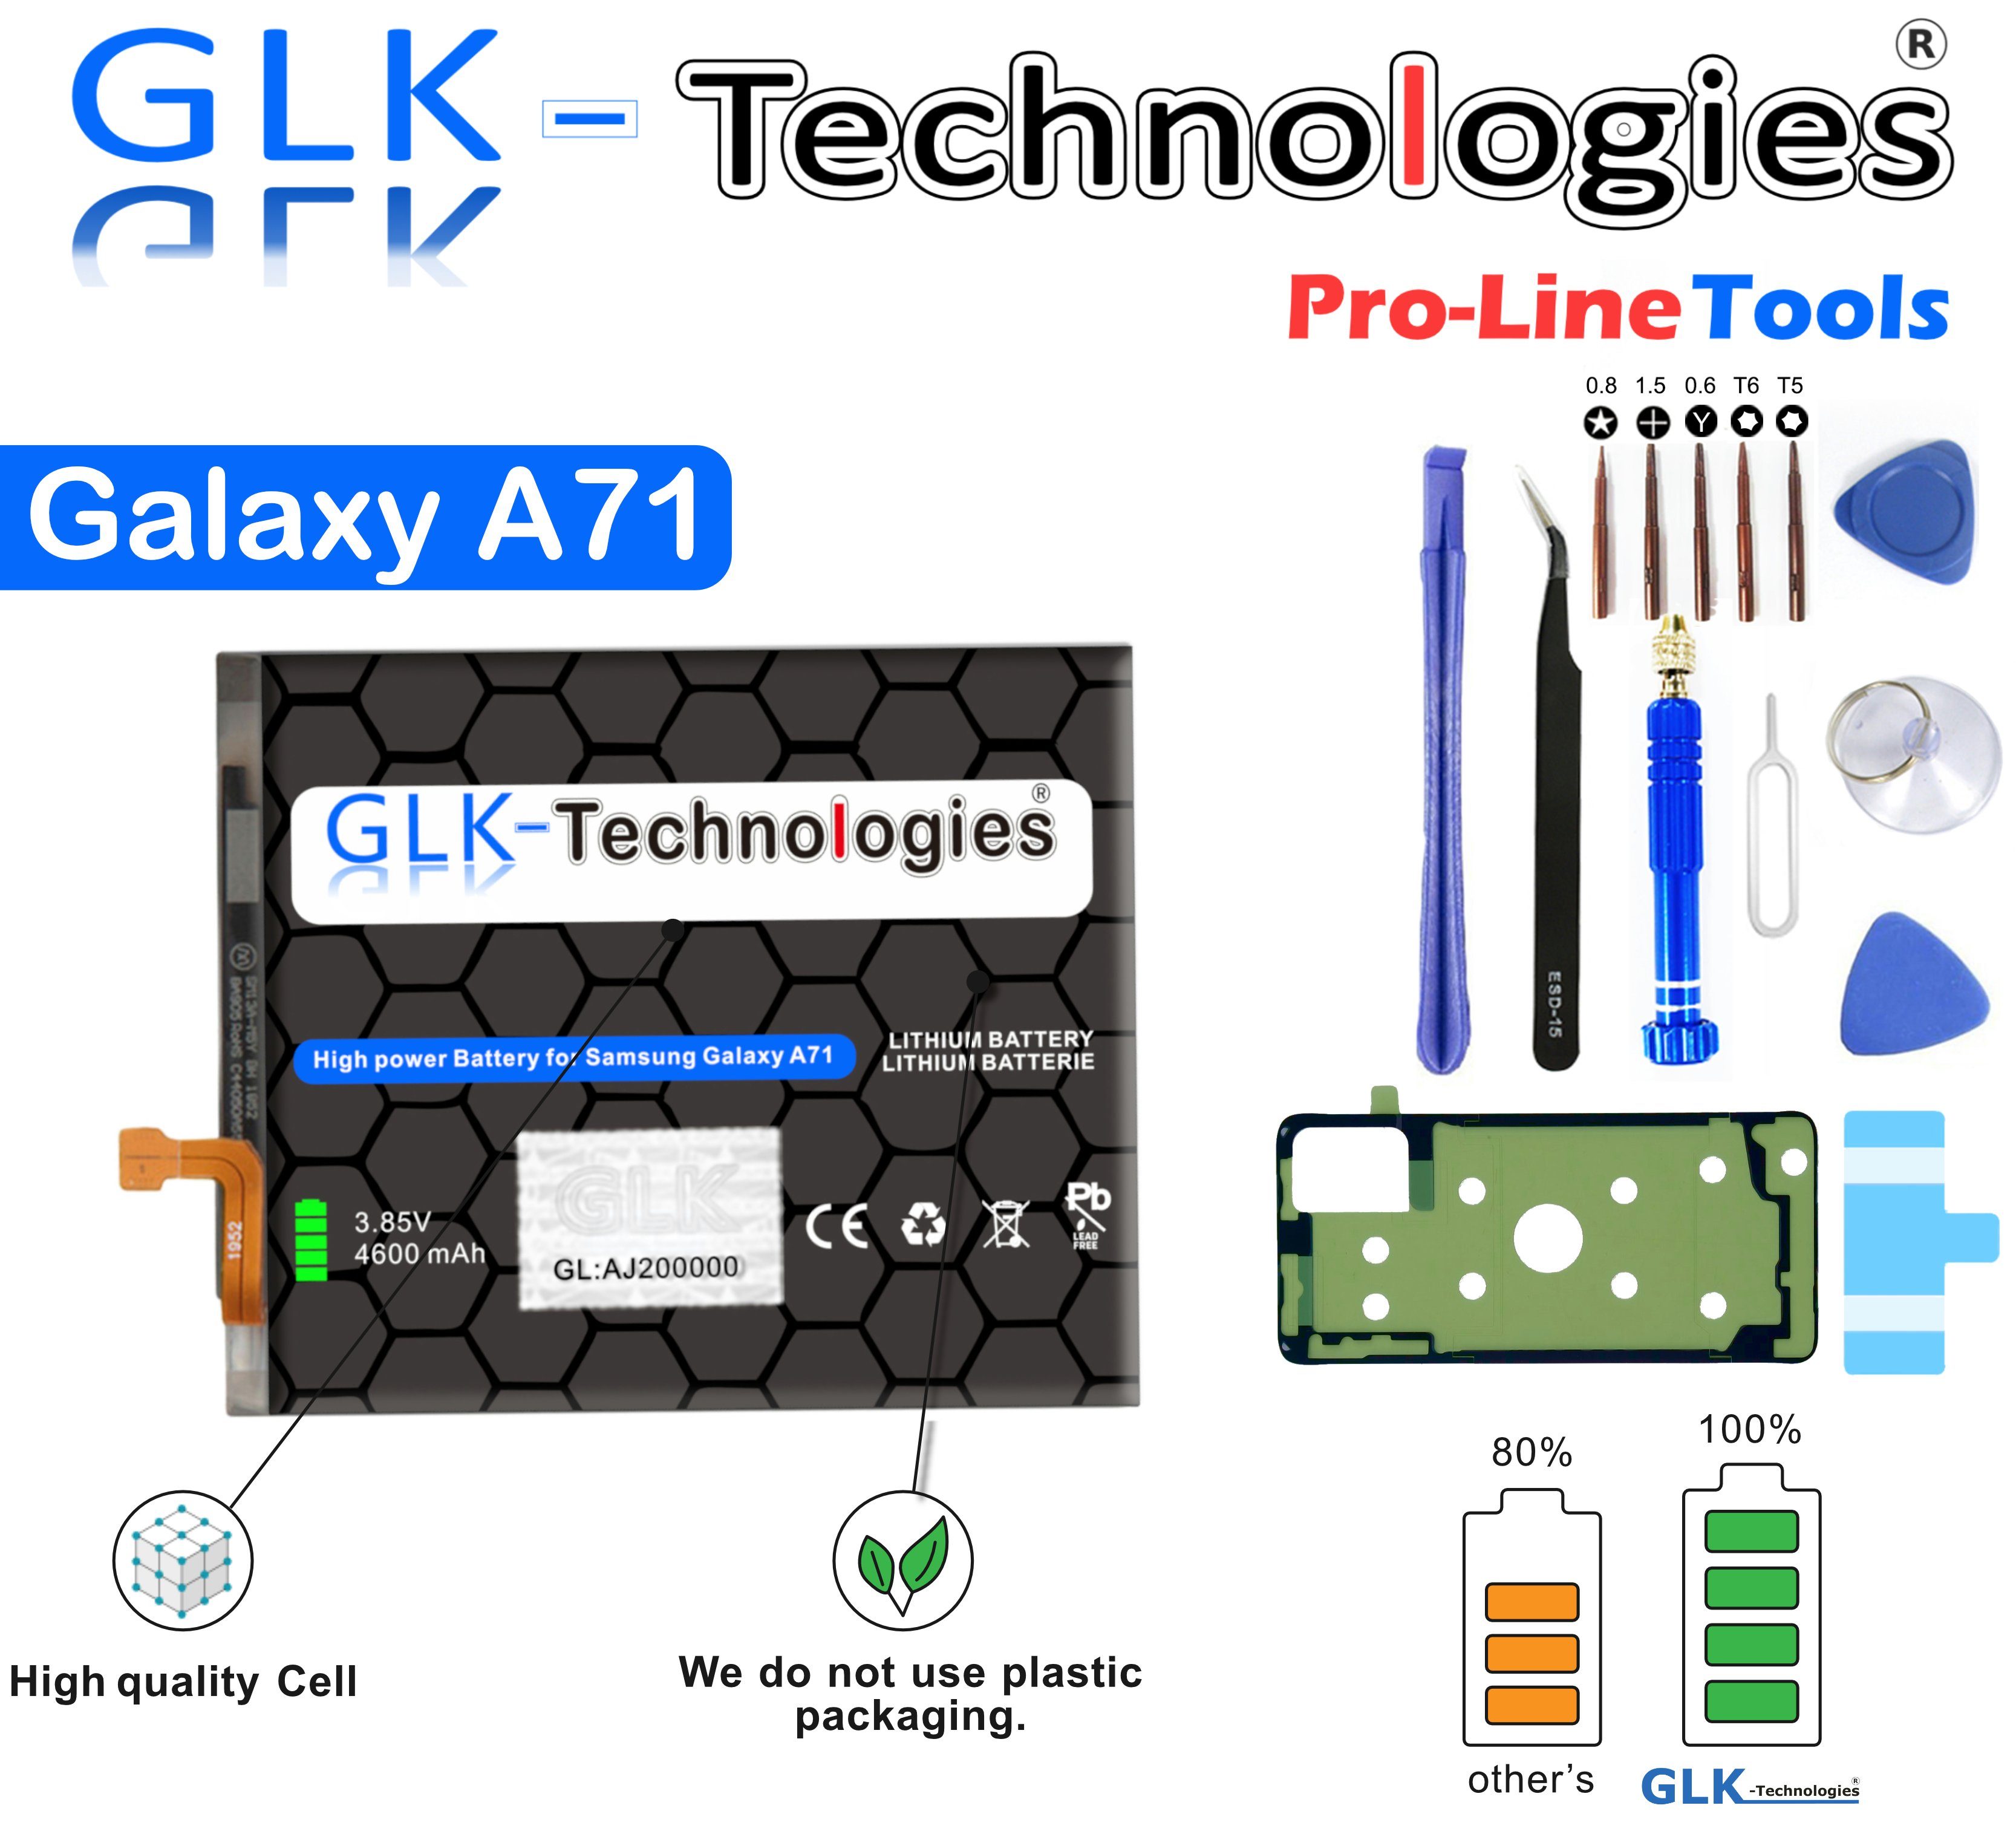 GLK-Technologies High Power Ersatzakku kompatibel mit Samsung Galaxy A71 SM-A715F / Dual-SIM, GLK-Technologies Battery, accu, 4600 mAh Akku, inkl. Profi Werkzeug Set Kit NUE Handy-Akku (3,85 V)